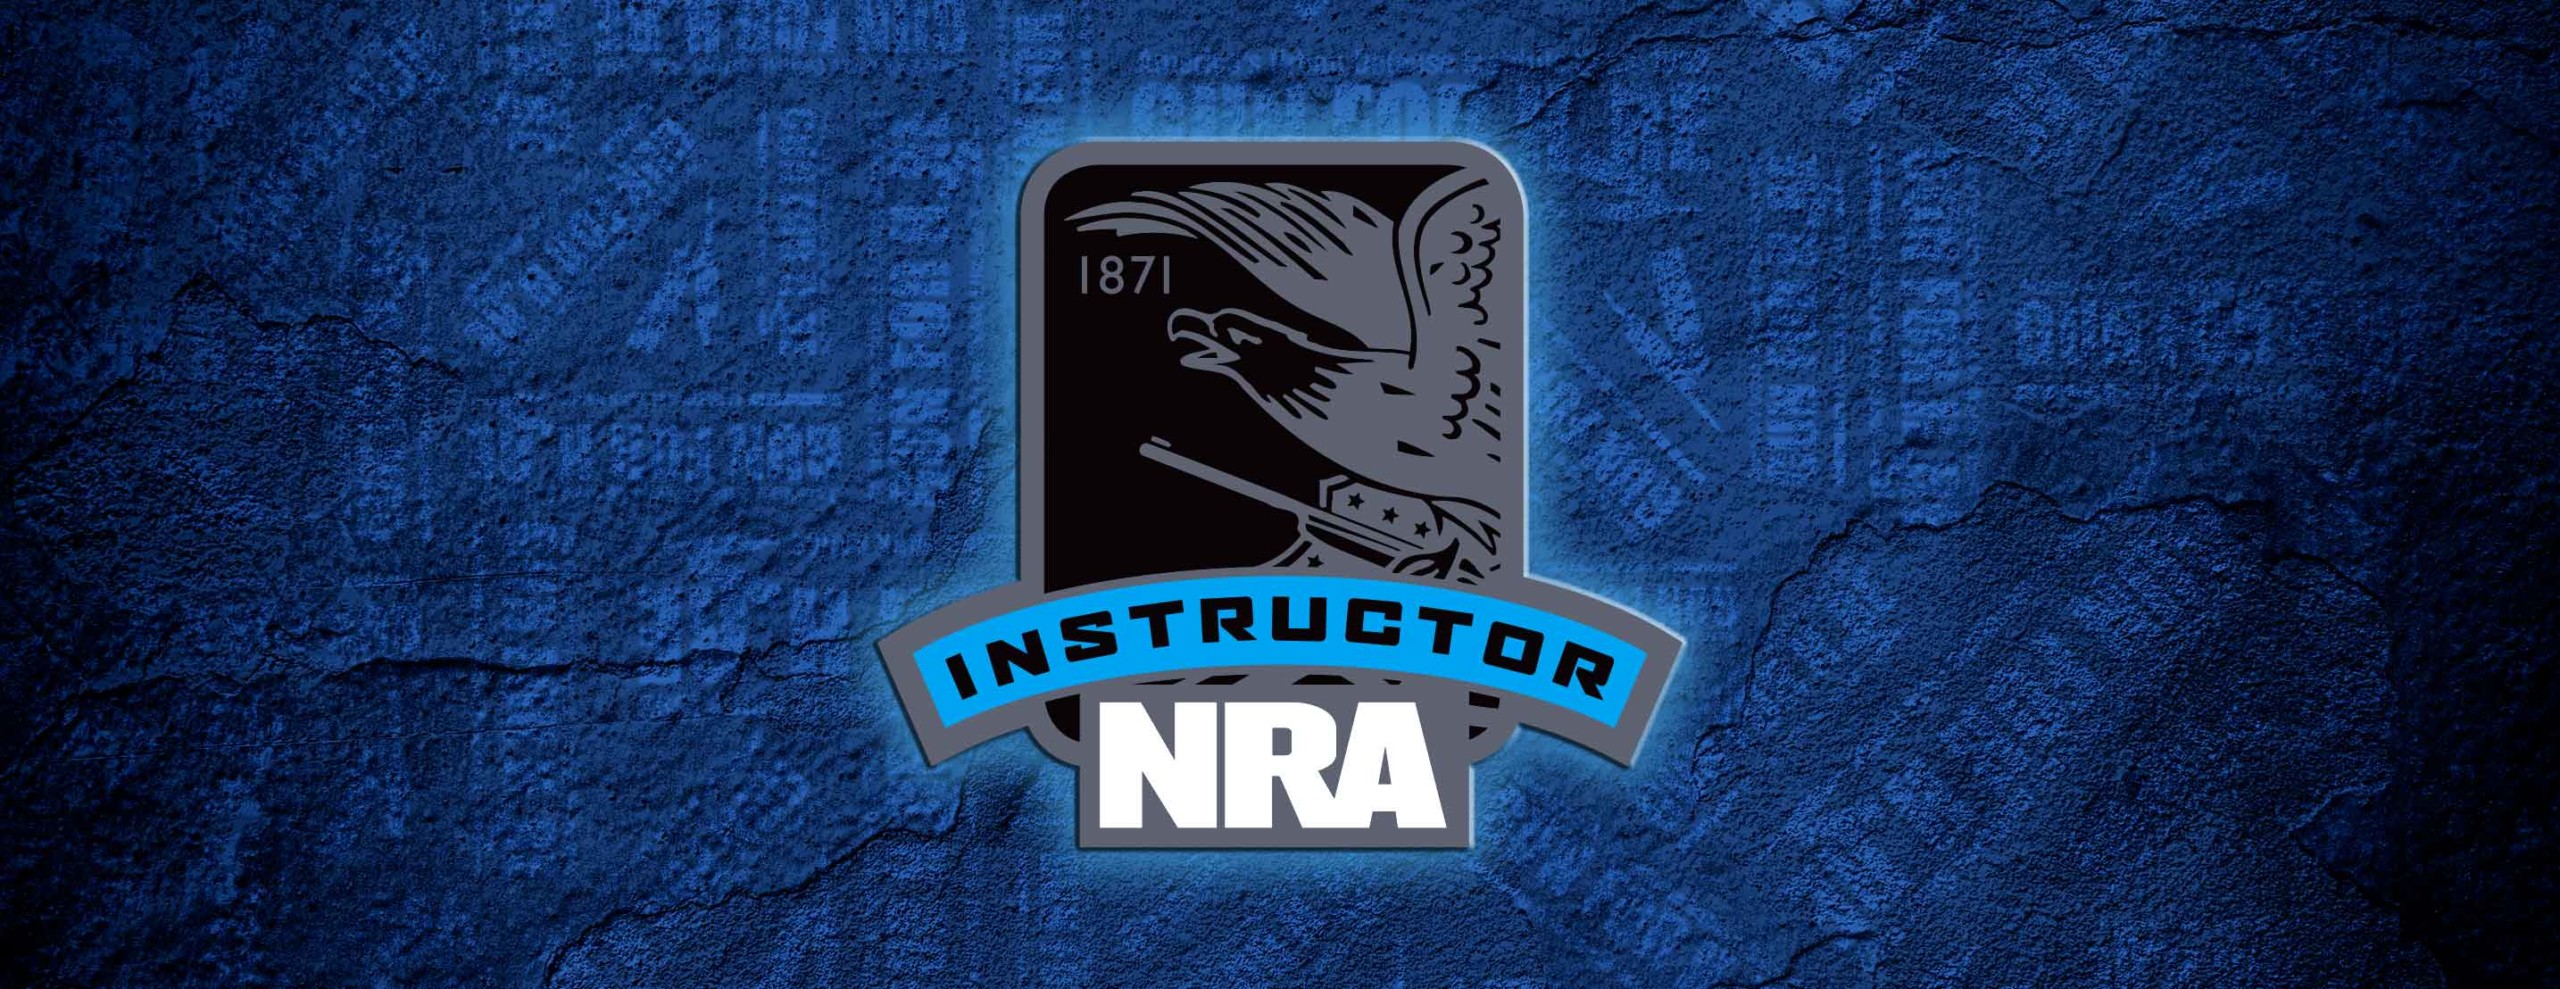 NRAinstructor scaled - NRA Student CCW Training